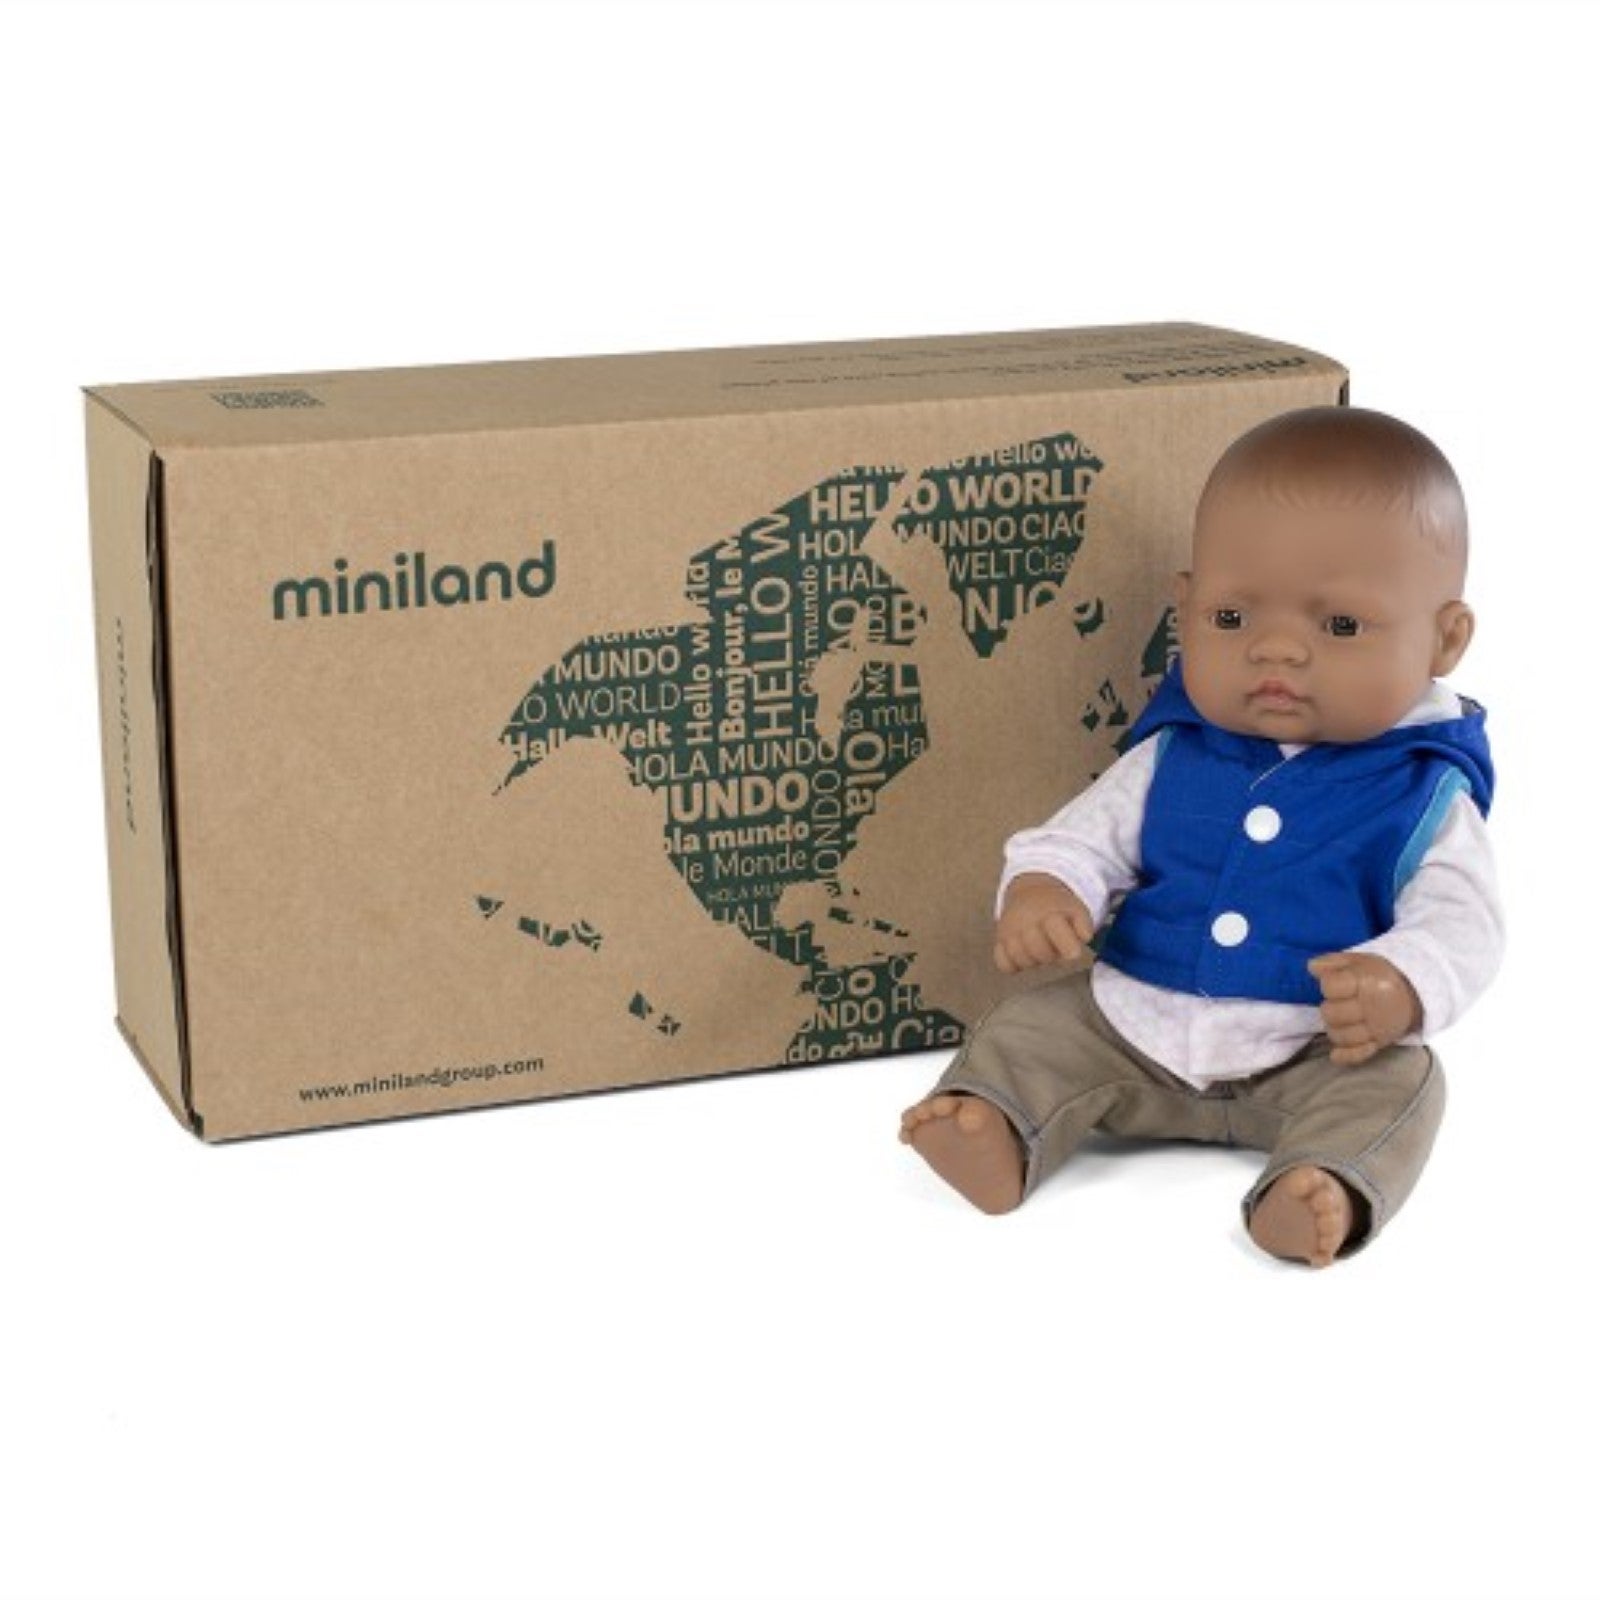 Miniland Doll Latino Latin American Hispanic Boy with Outfit Boxed 32 cm